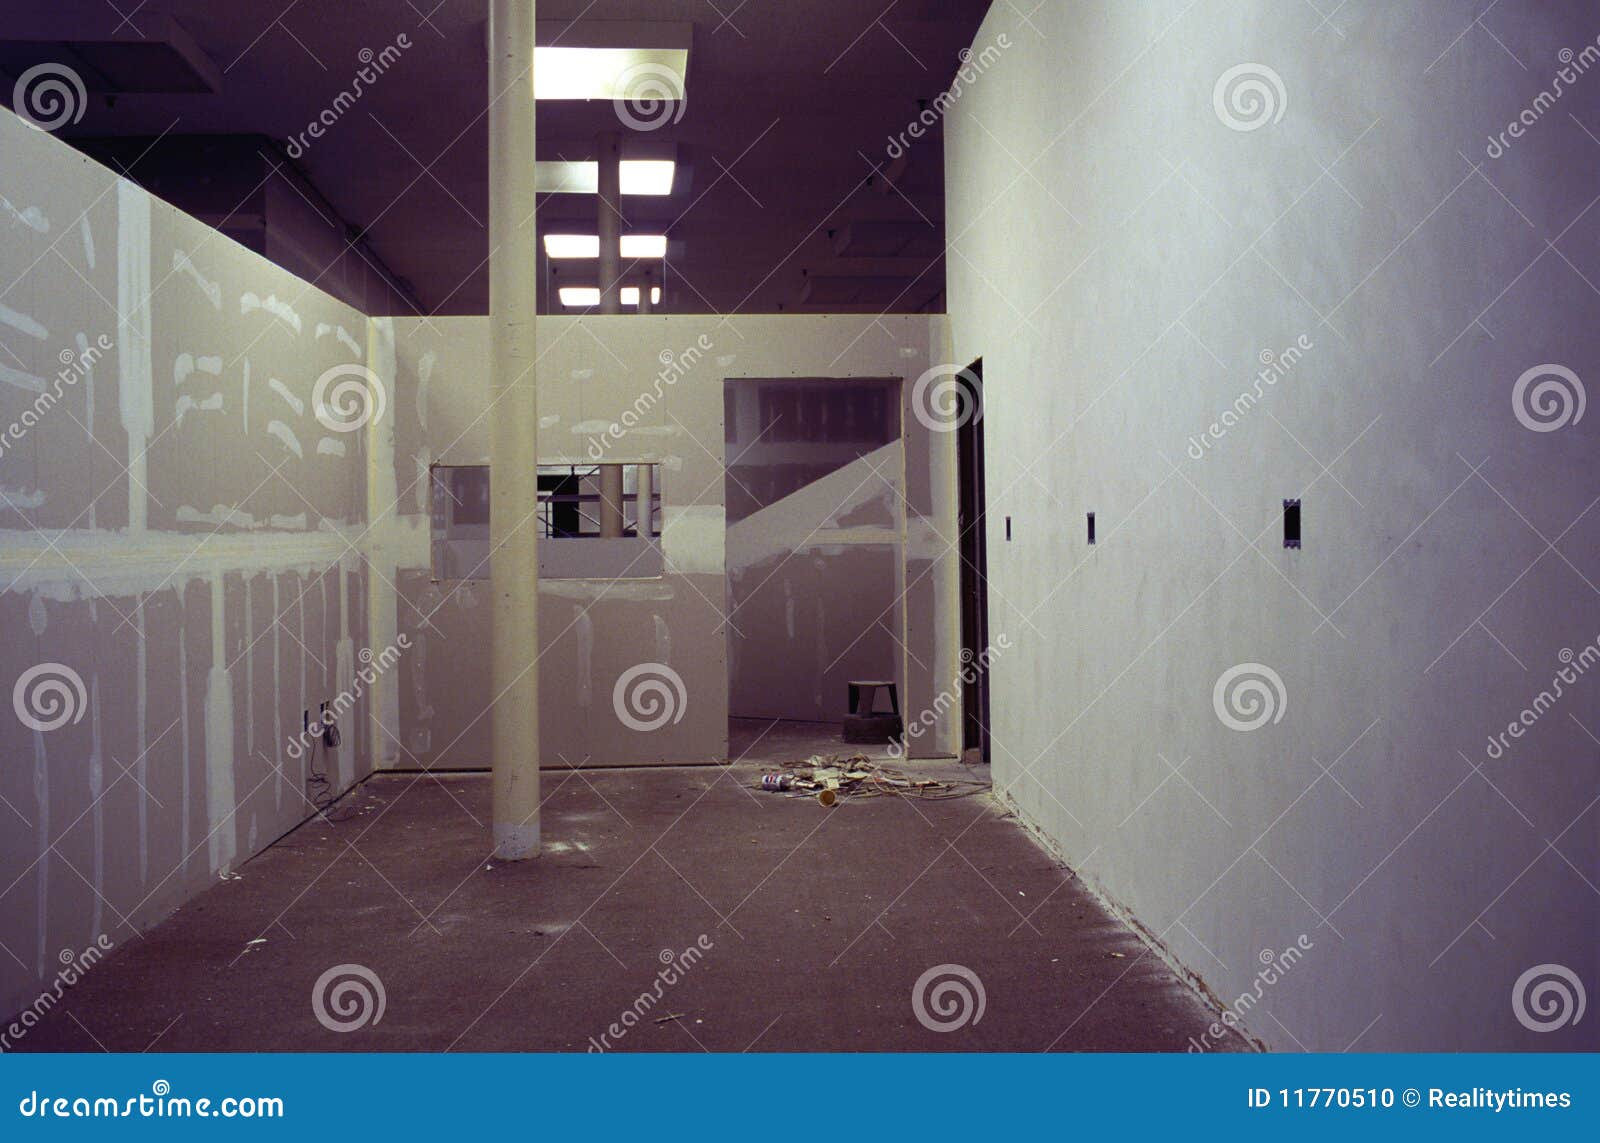 interior office partition renovation